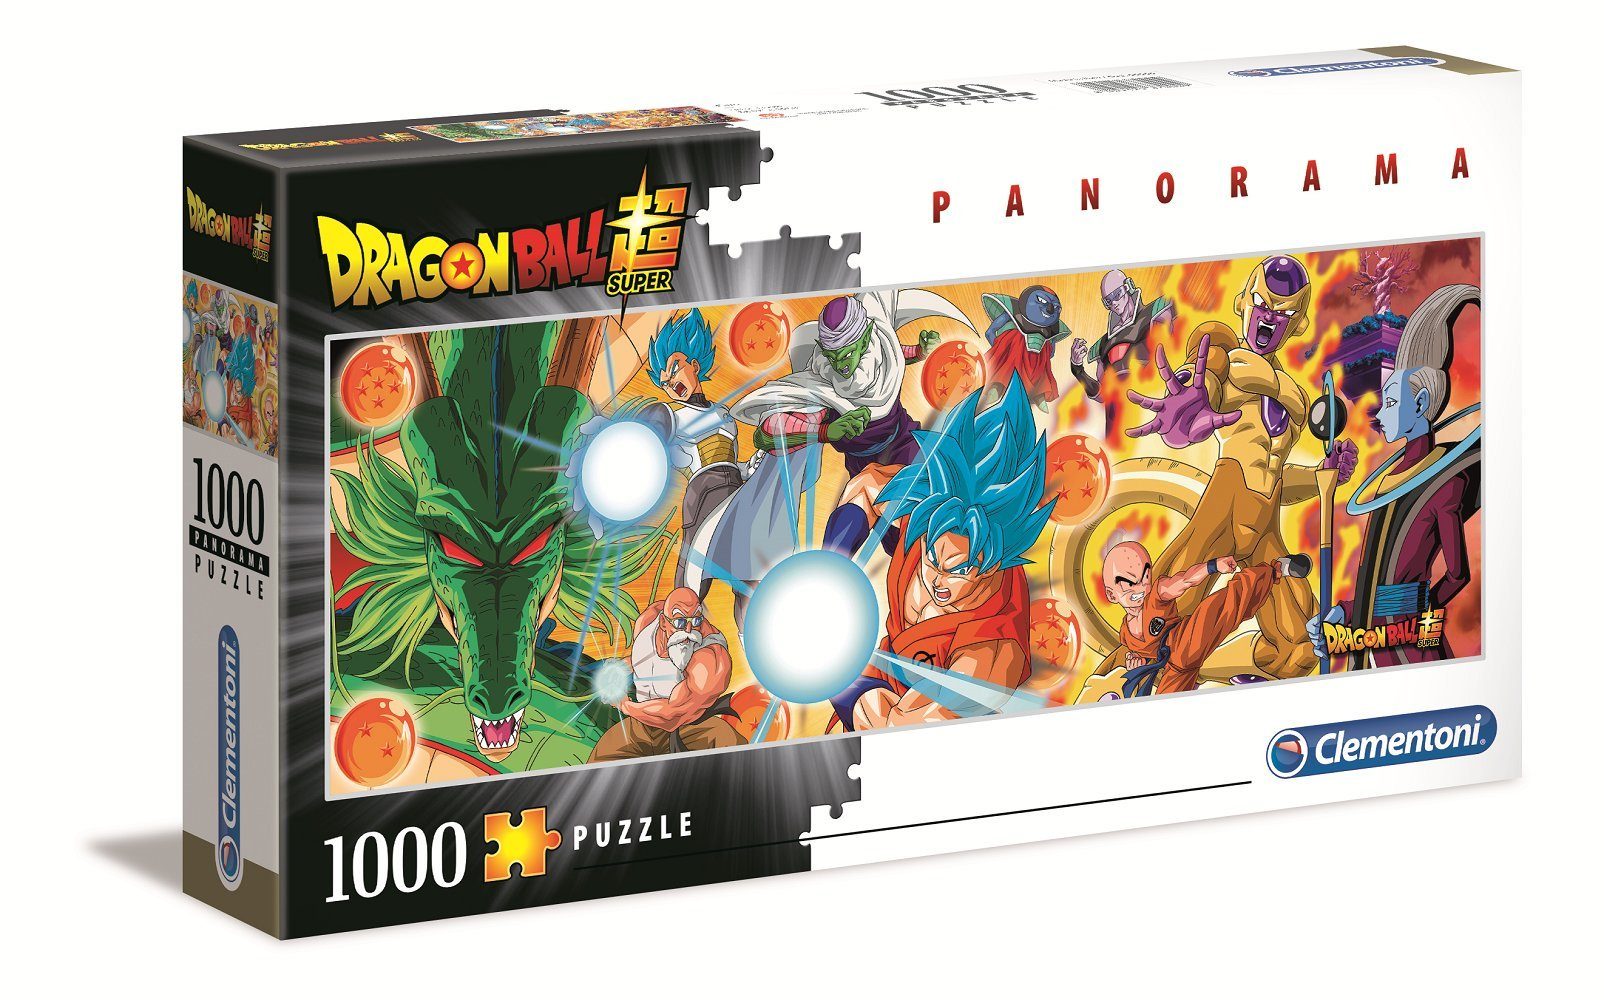 Puzzle 39486 Dragon Ball 1000 Teile Panorama Puzzle, 1000 Puzzleteile